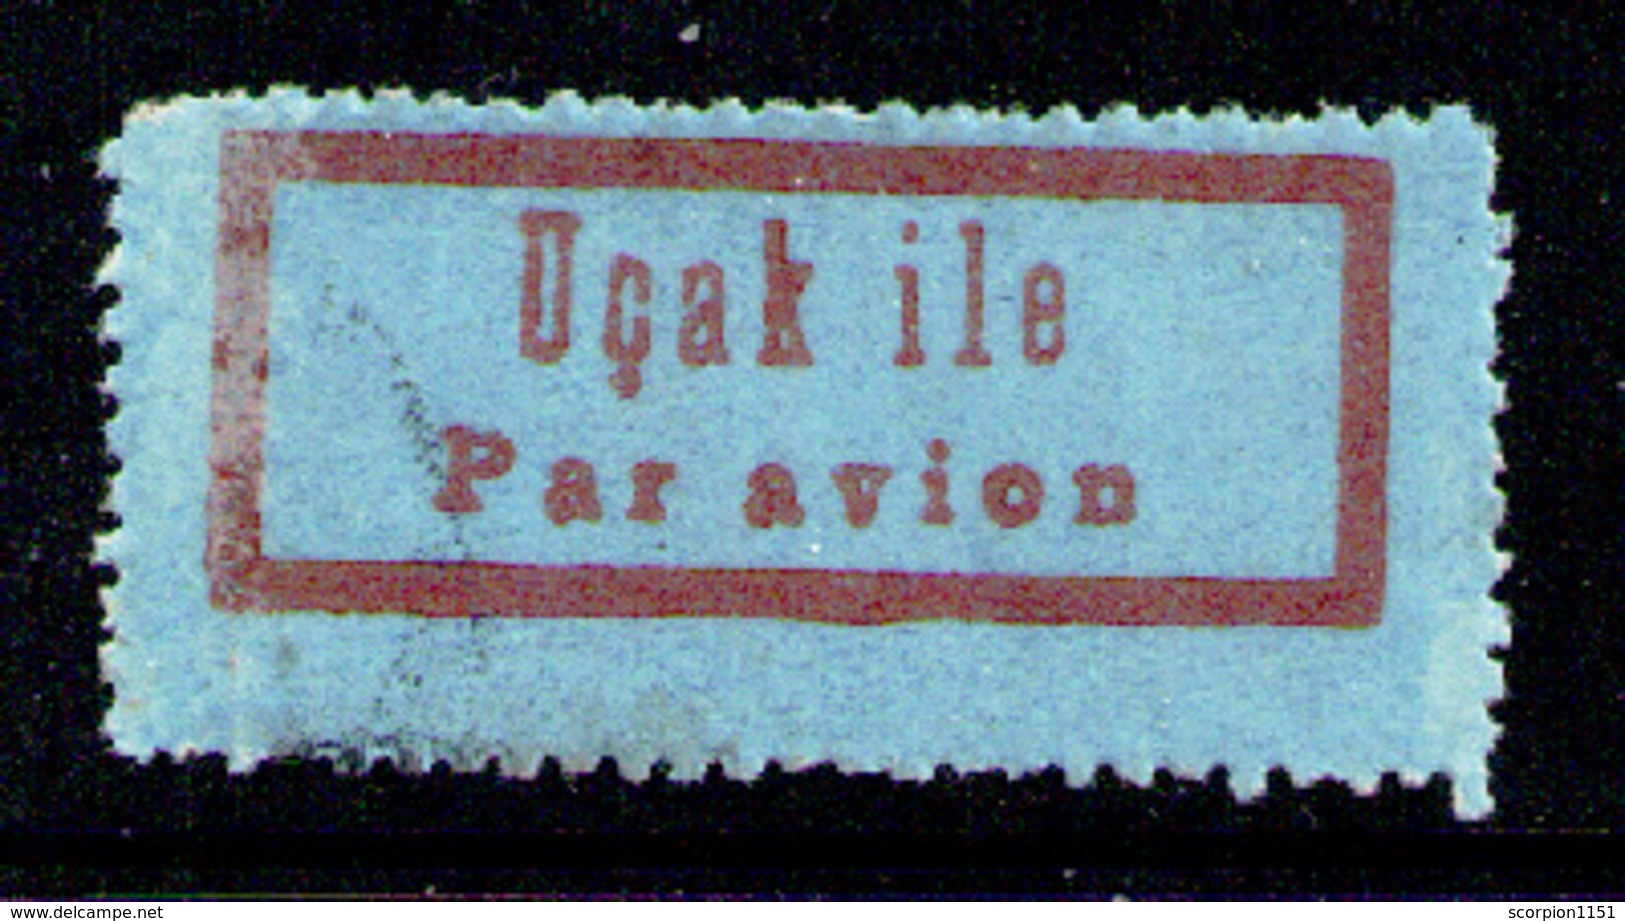 TURKEY CYPRUS - Air Post Label Used - Oblitérés